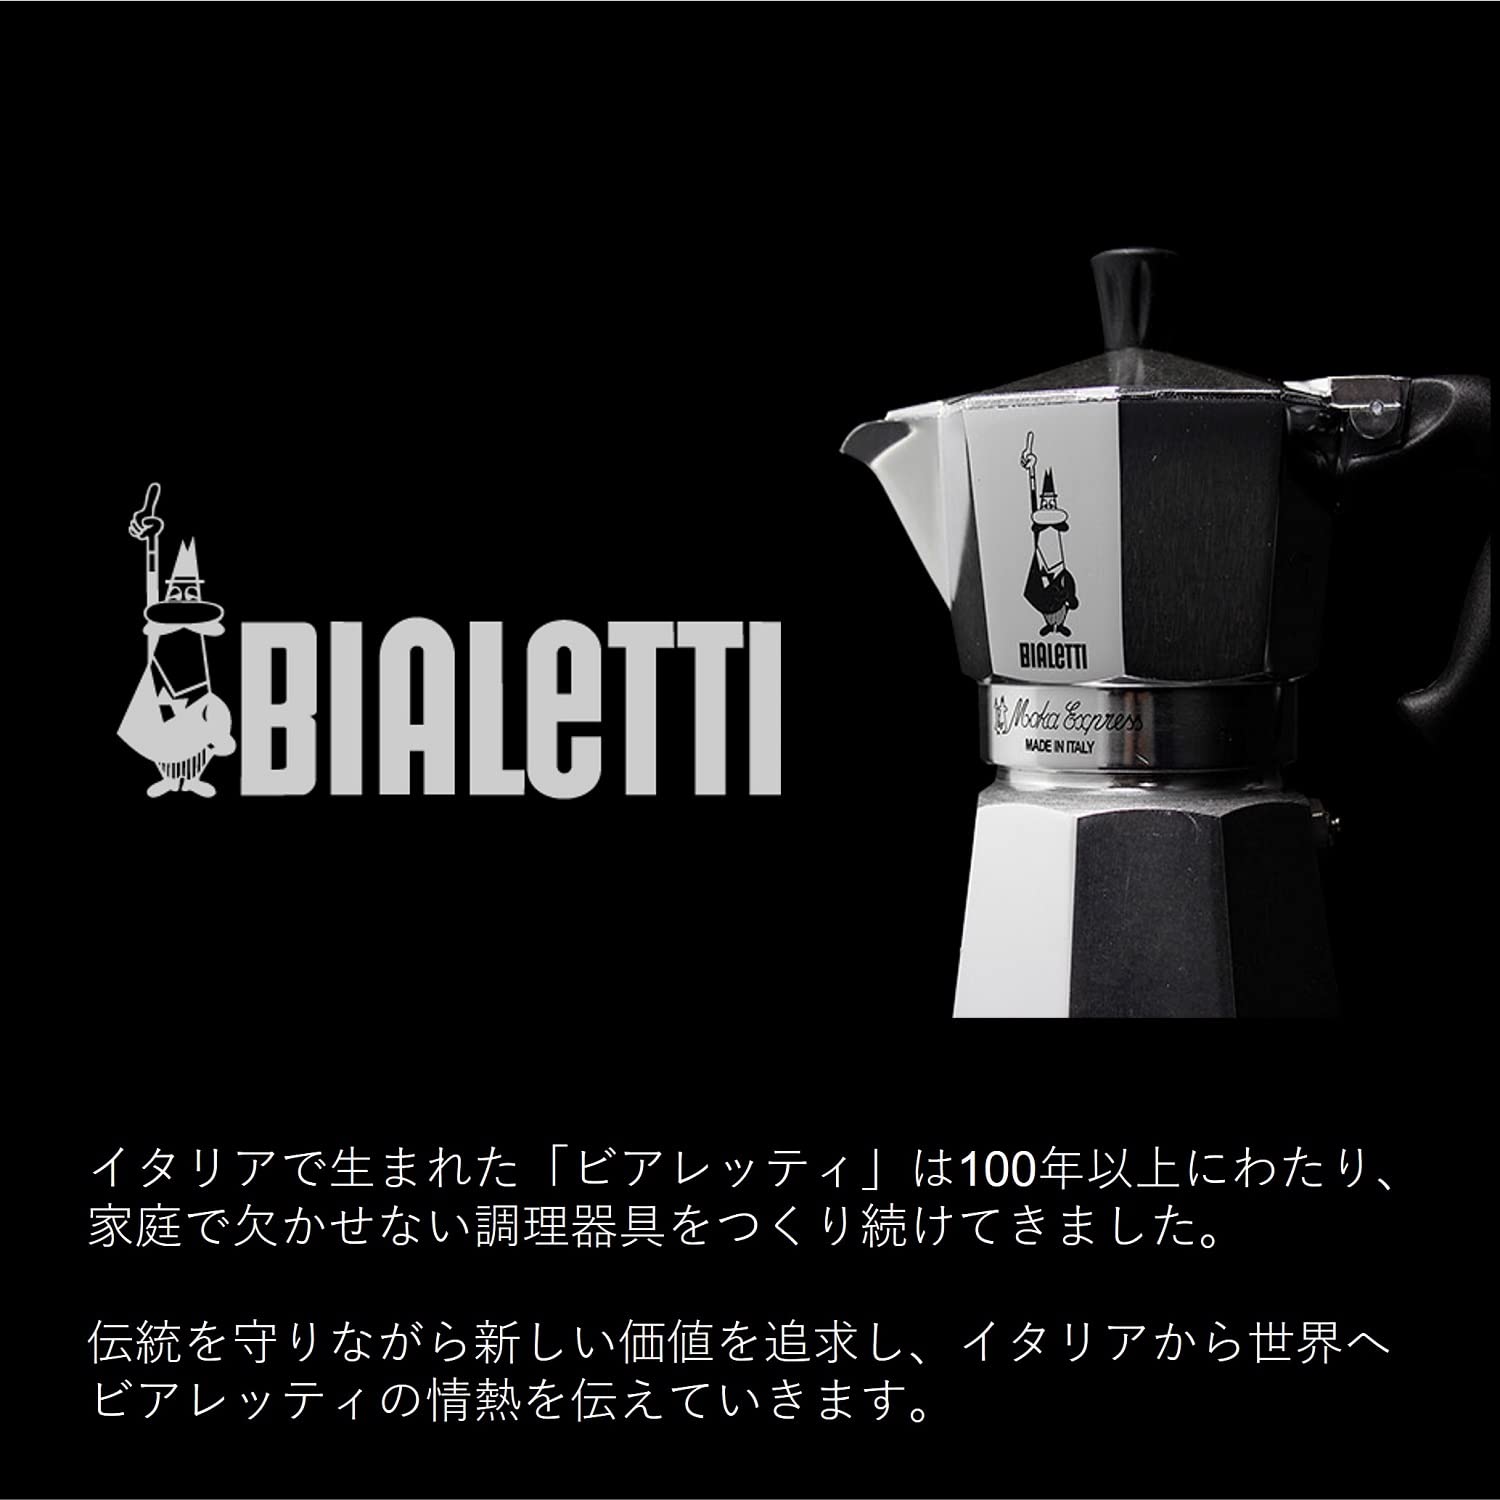 Bialetti - Moka Espress: Iconic Stovetop Espresso Maker, Makes Real Italian Coffee, Moka Pot 6 Cups (6 Oz), Aluminium, Silver